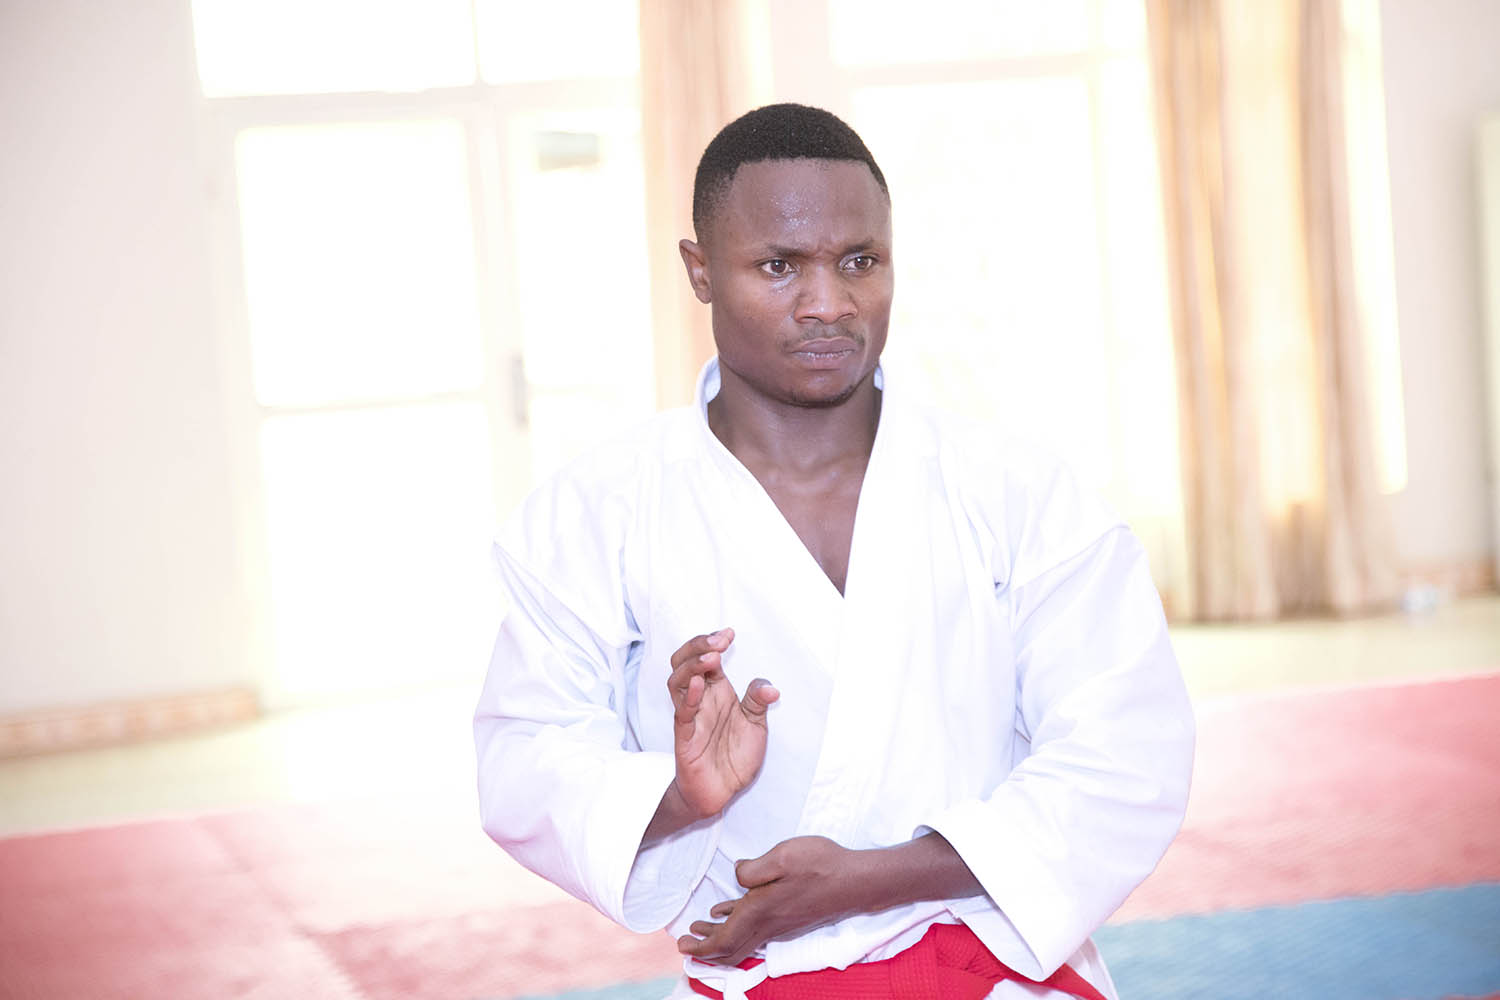 Jean Claude Munyaburanga, 23, is one of the Kata specialists from Zen Karate-Do Club. (Emmanuel Kwizera)